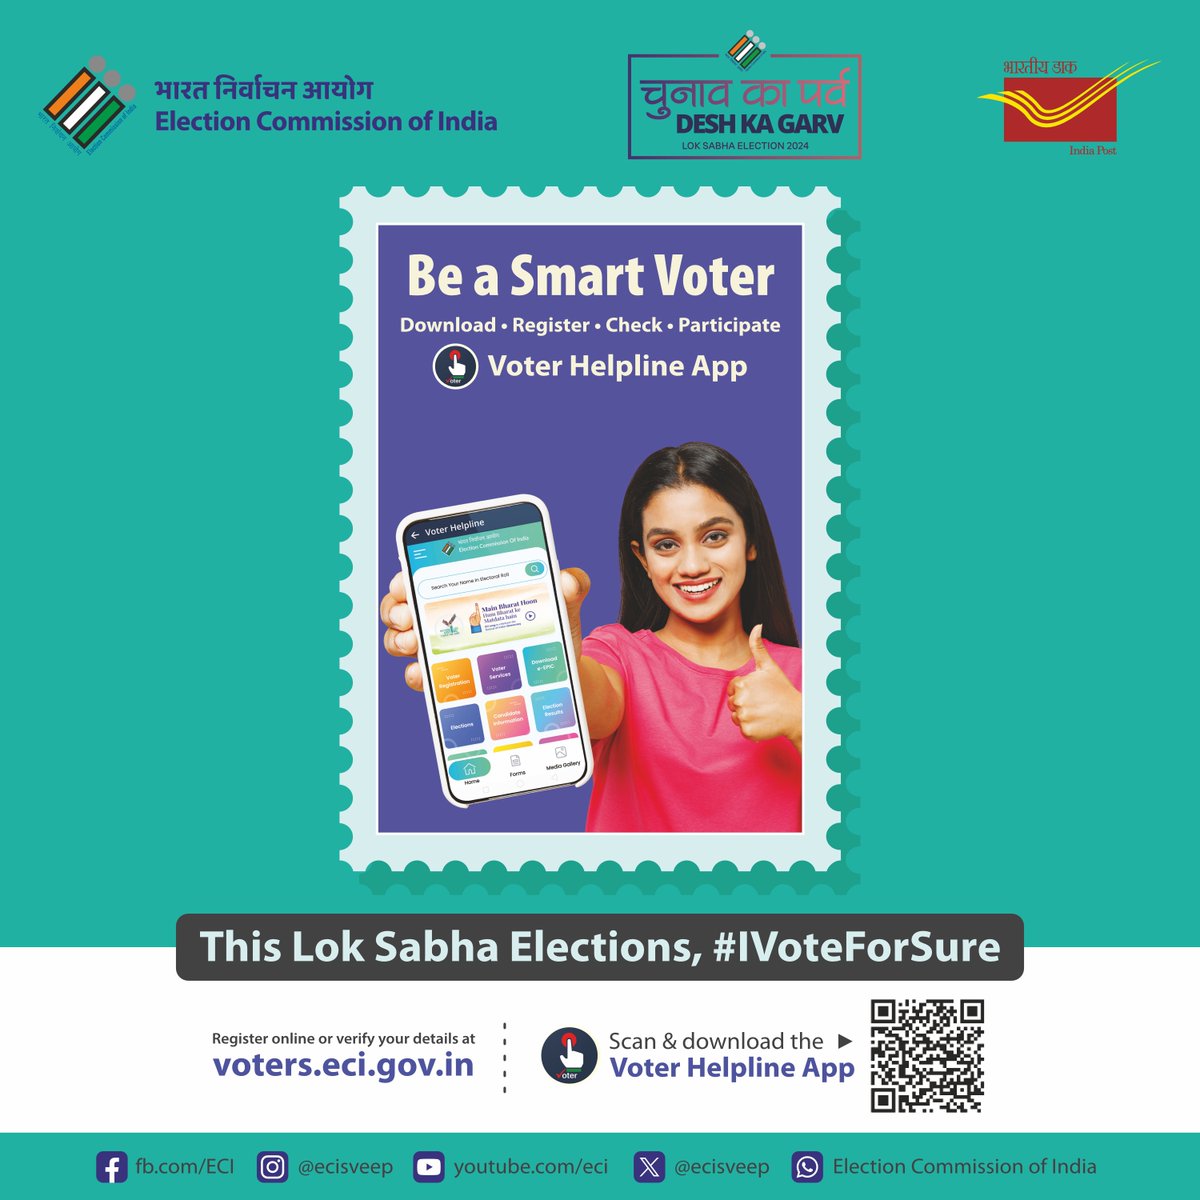 Voter Helpline App is a one-stop destination for all your election-related information, so download the VHA app and Be a Smart Voter! Chunav ka Parv, Desh ka Garv
#IVoteForSure #MeraVoteDeshkeliye 
@IndiaPostOffice @DDNewslive @PIB_India @ECISVEEP @airnewsalerts